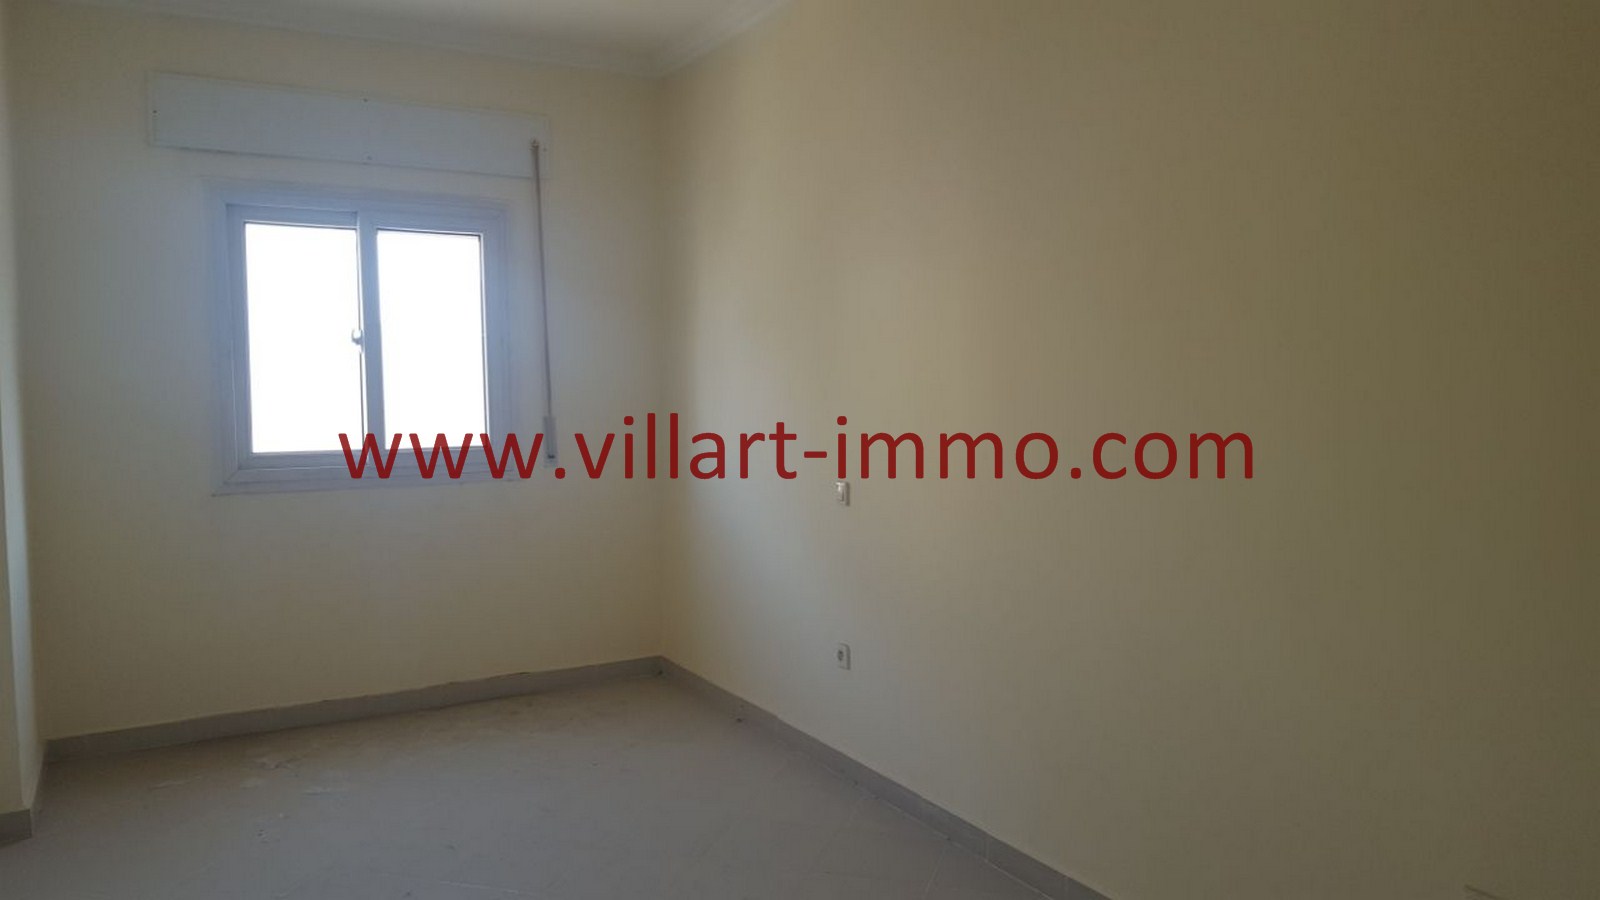 1-Vente-Appartement-Tanger-Mojahidine -Salon-VA485-Villart Immo